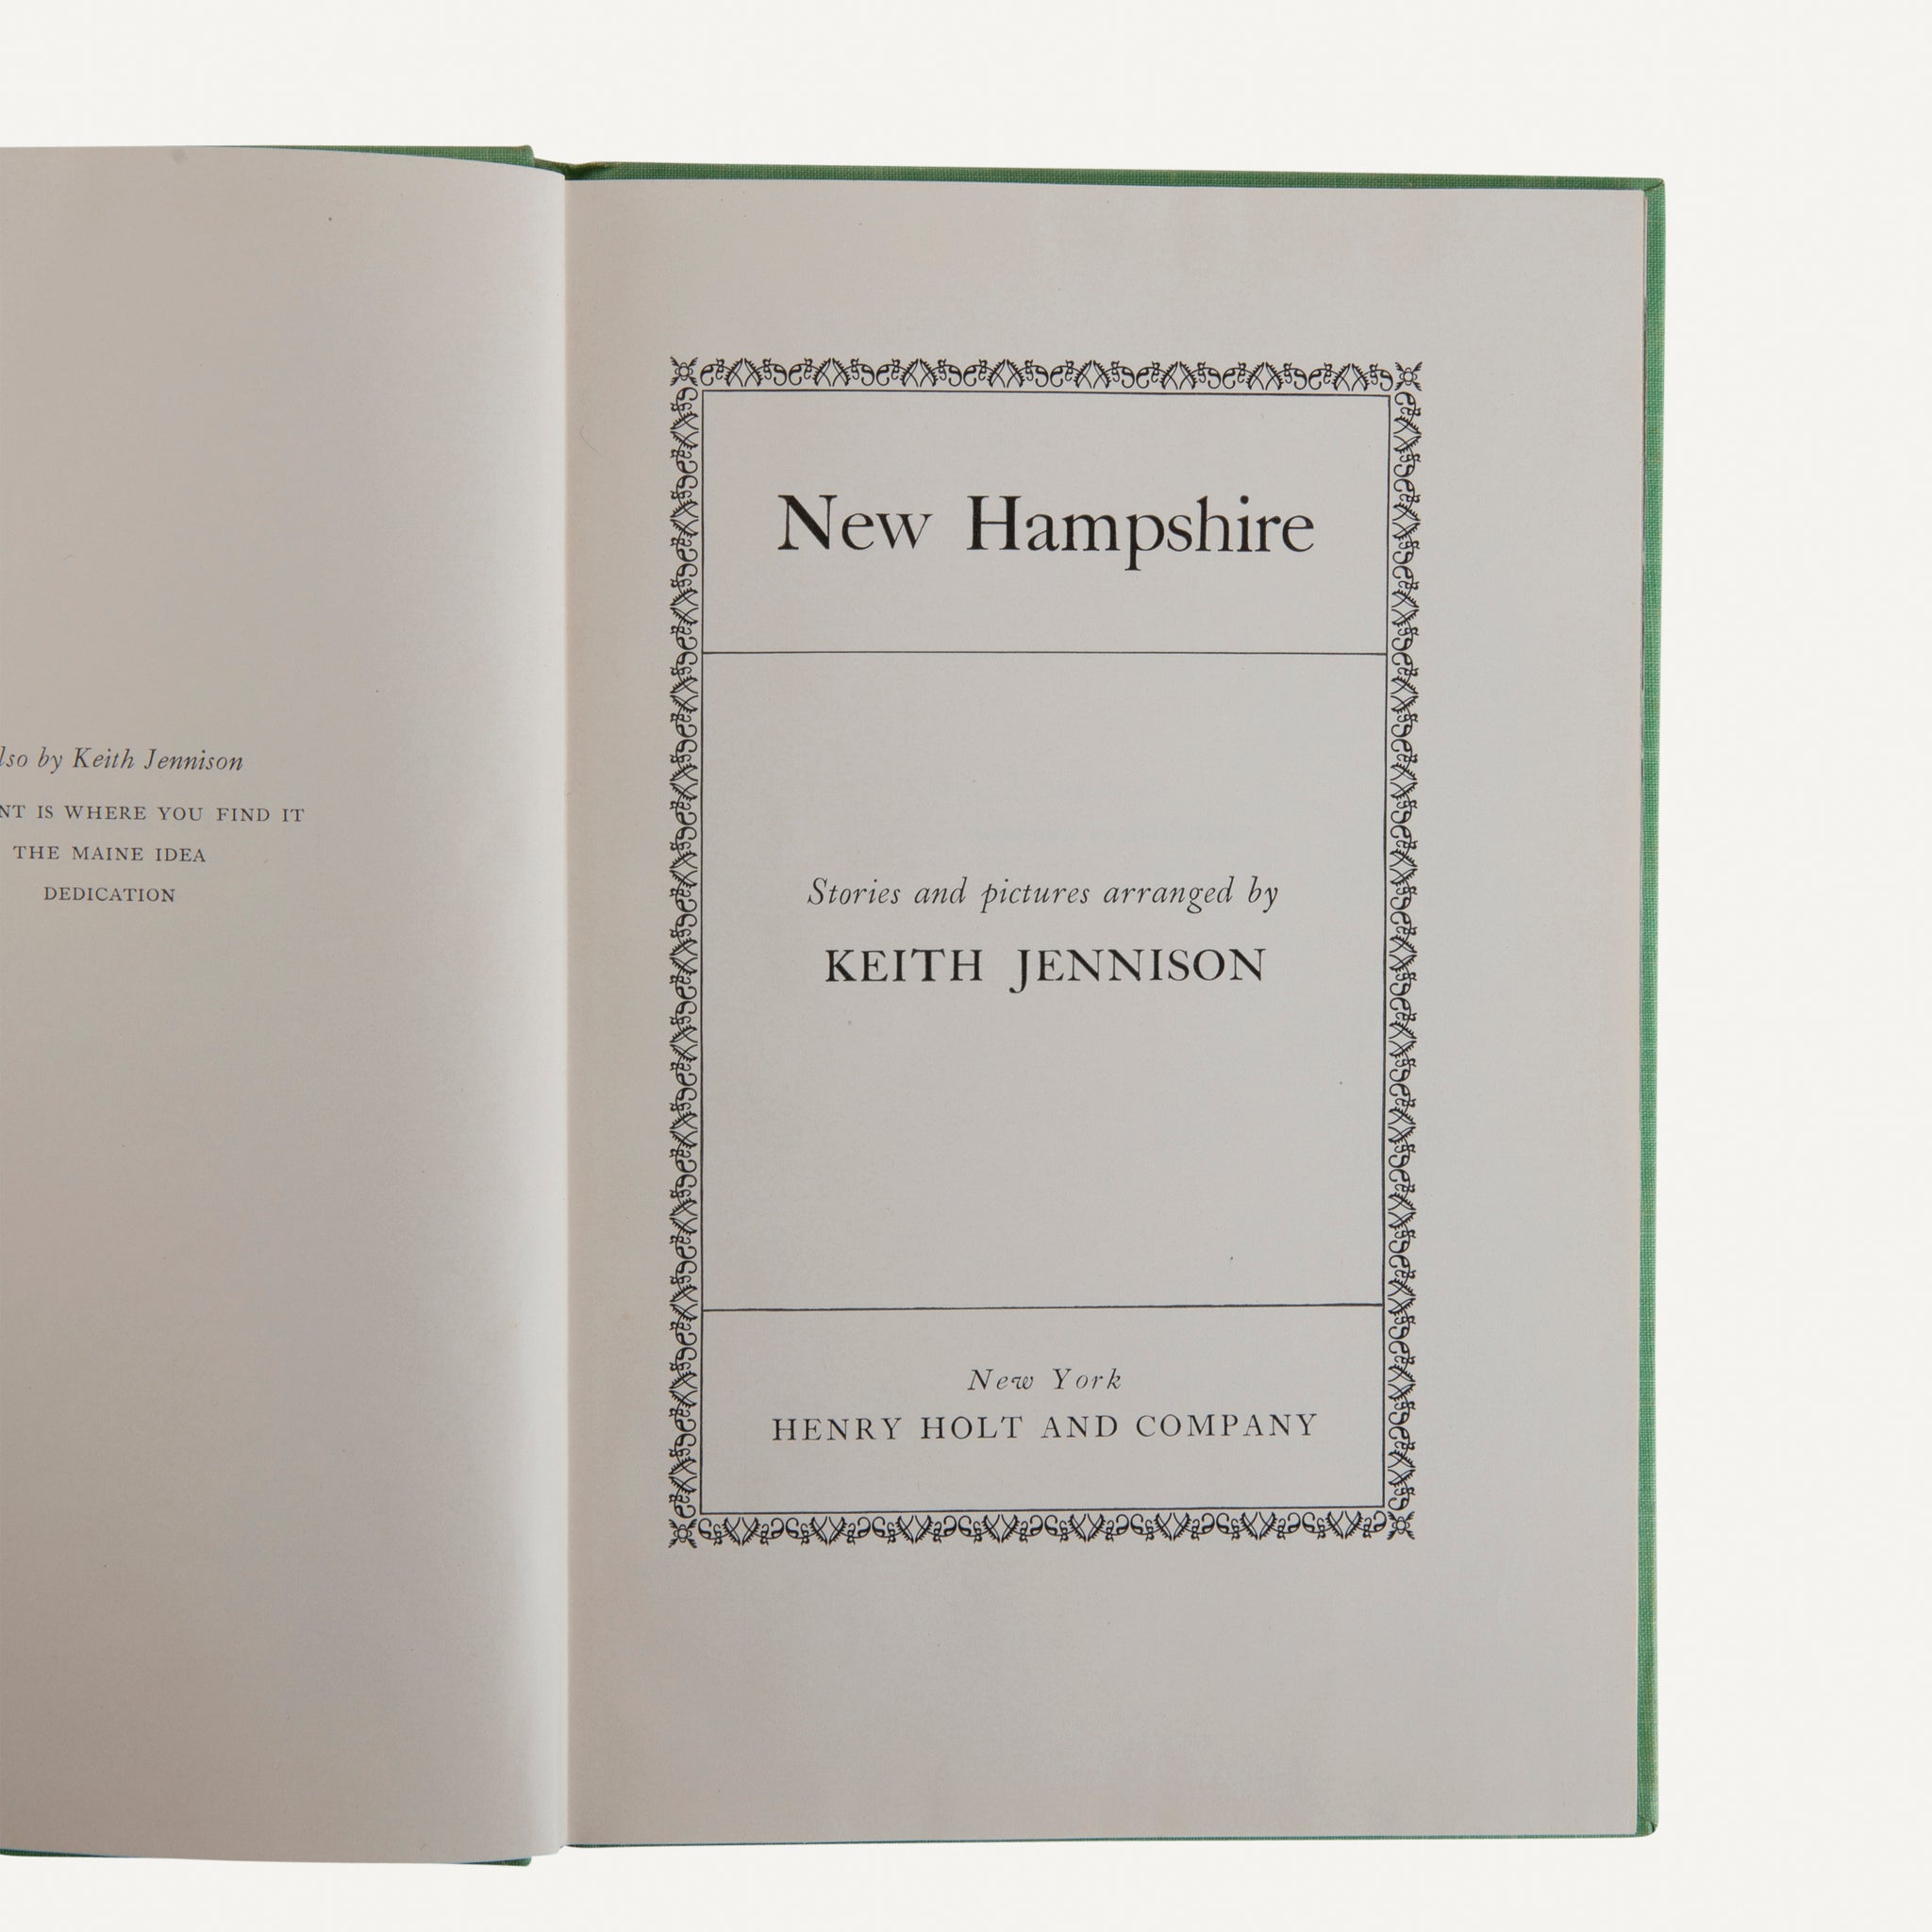 VINTAGE "NEW HAMPSHIRE" BOOK